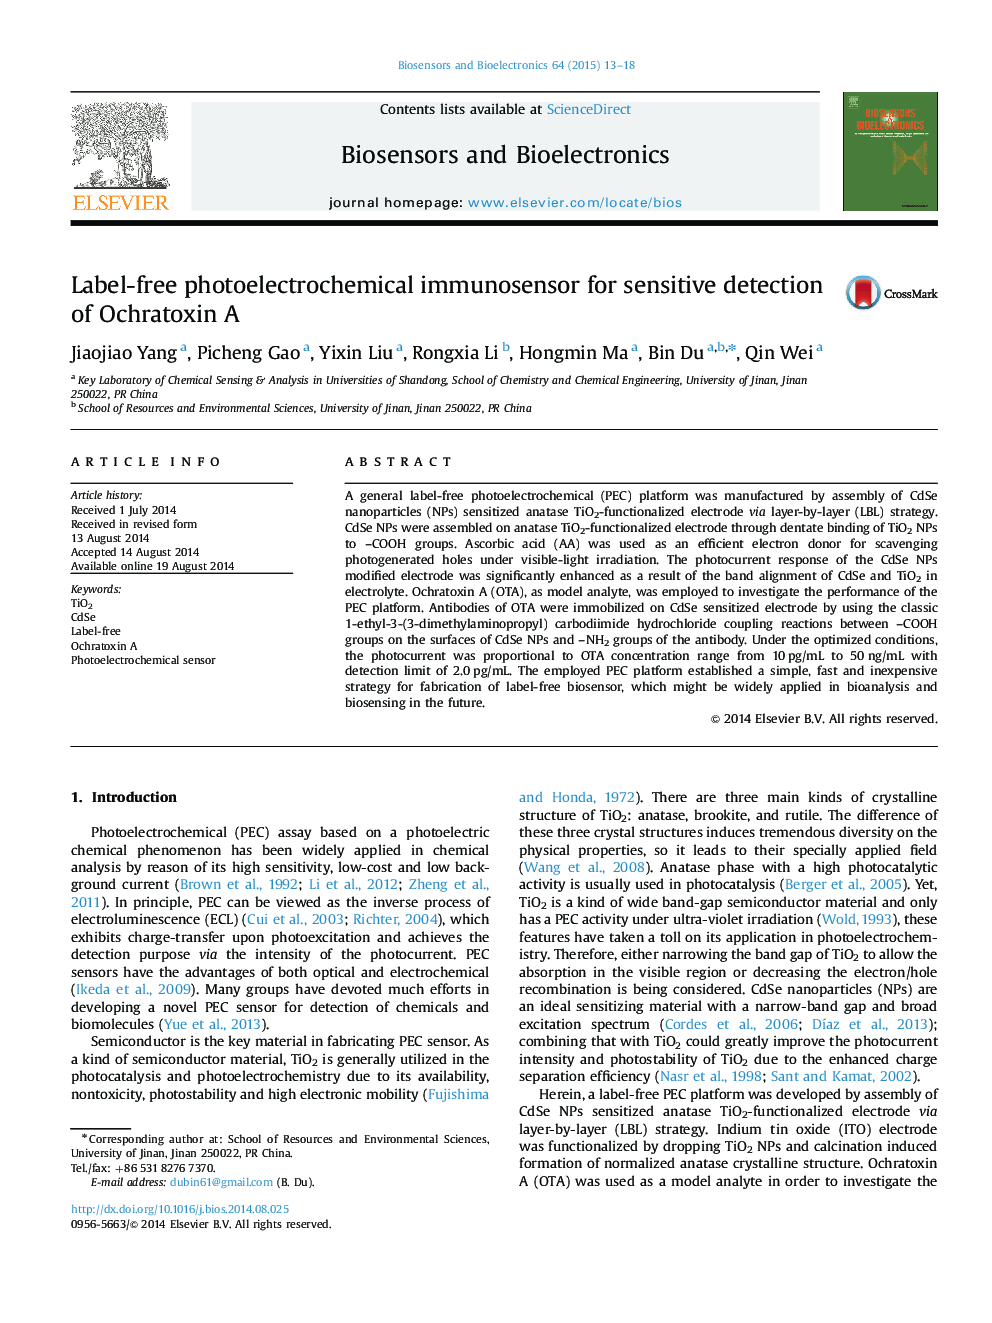 Label-free photoelectrochemical immunosensor for sensitive detection of Ochratoxin A